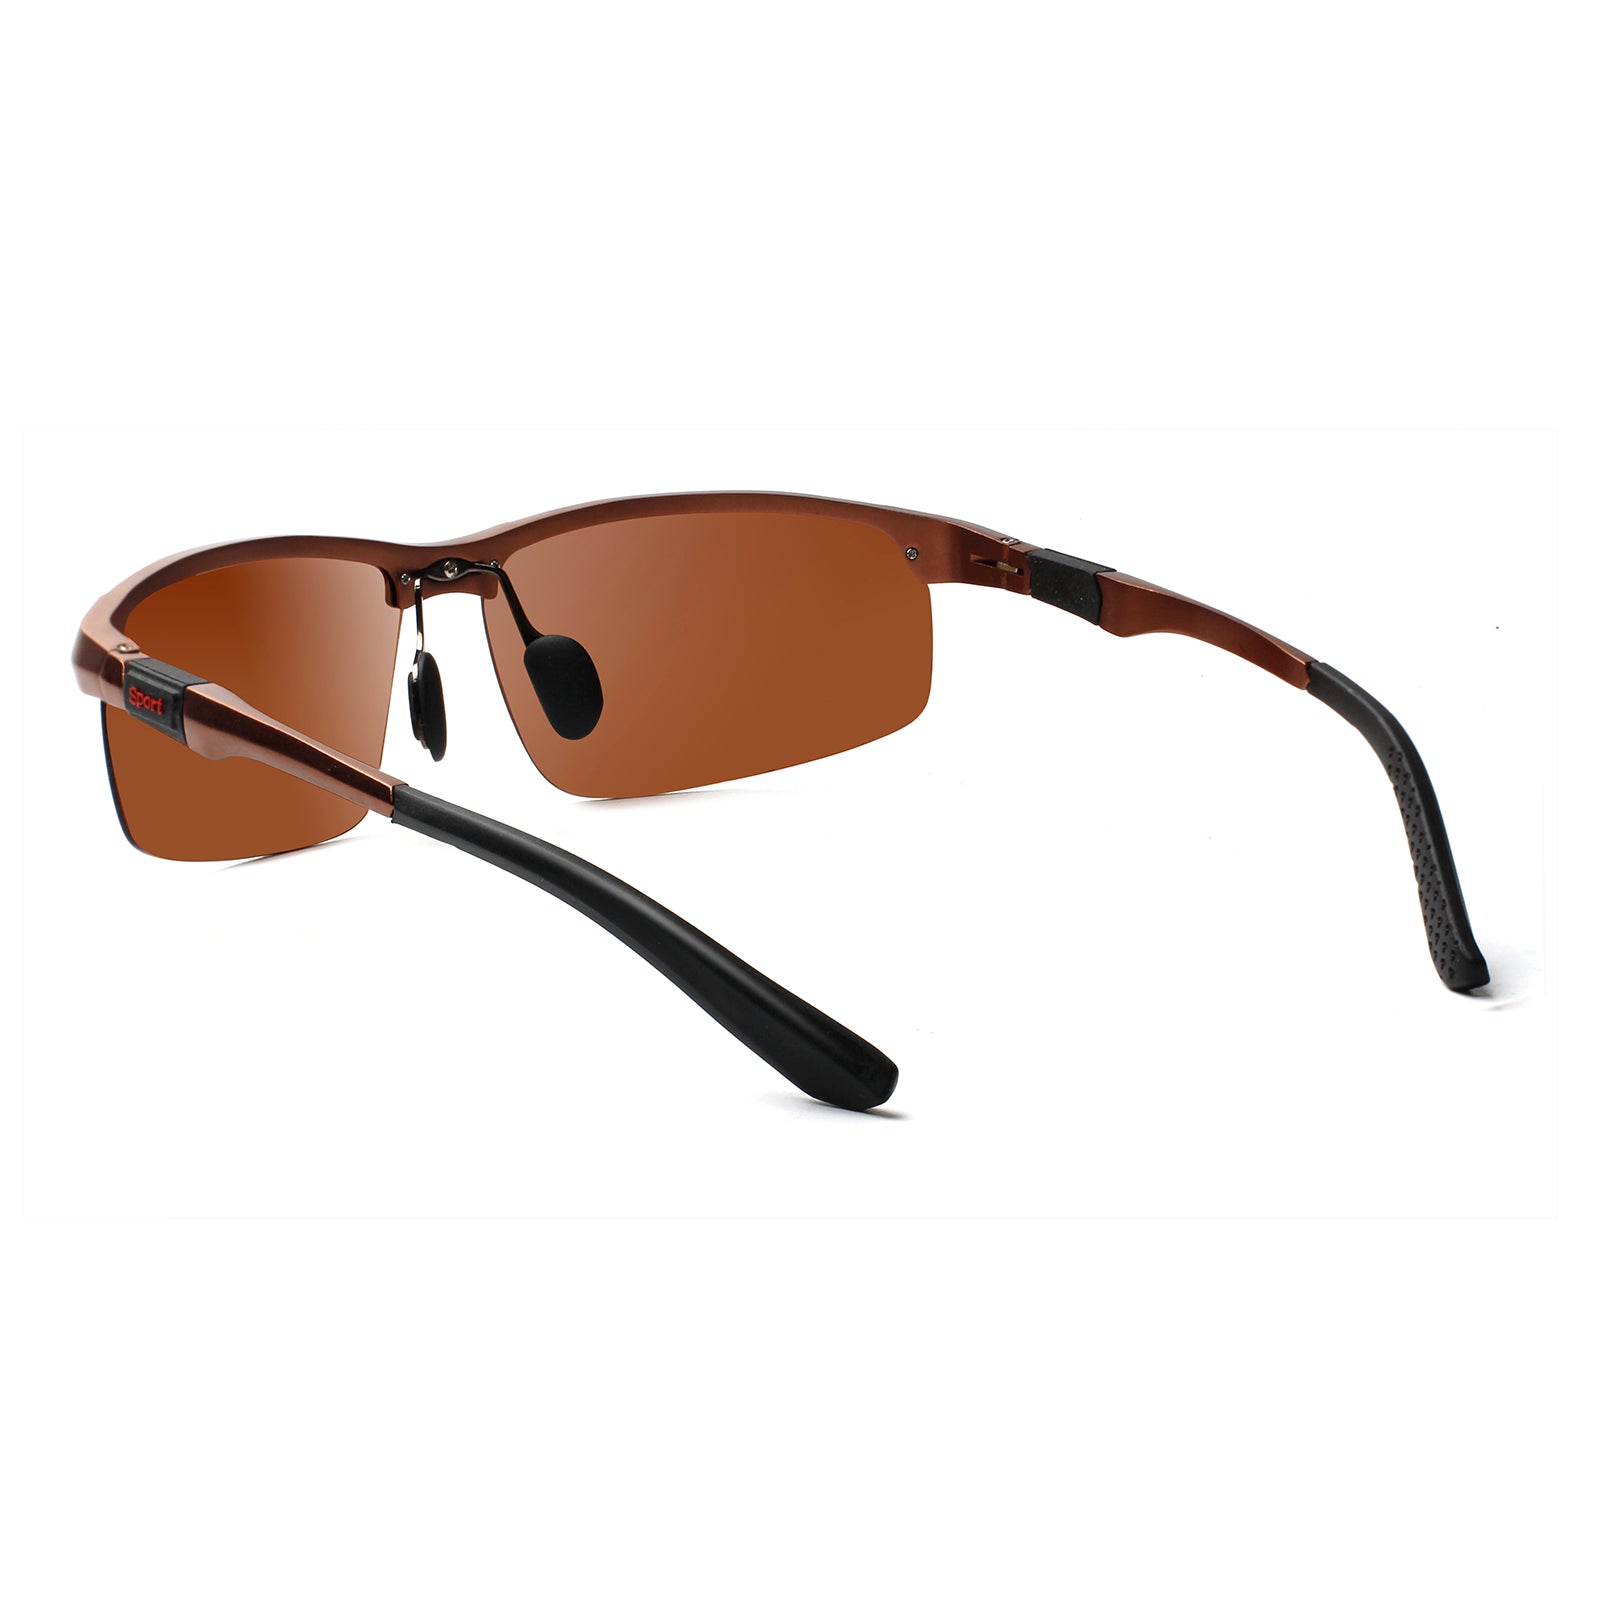 Mens Sports Polarized Sunglasses for Men - Al-Mg metal 3121